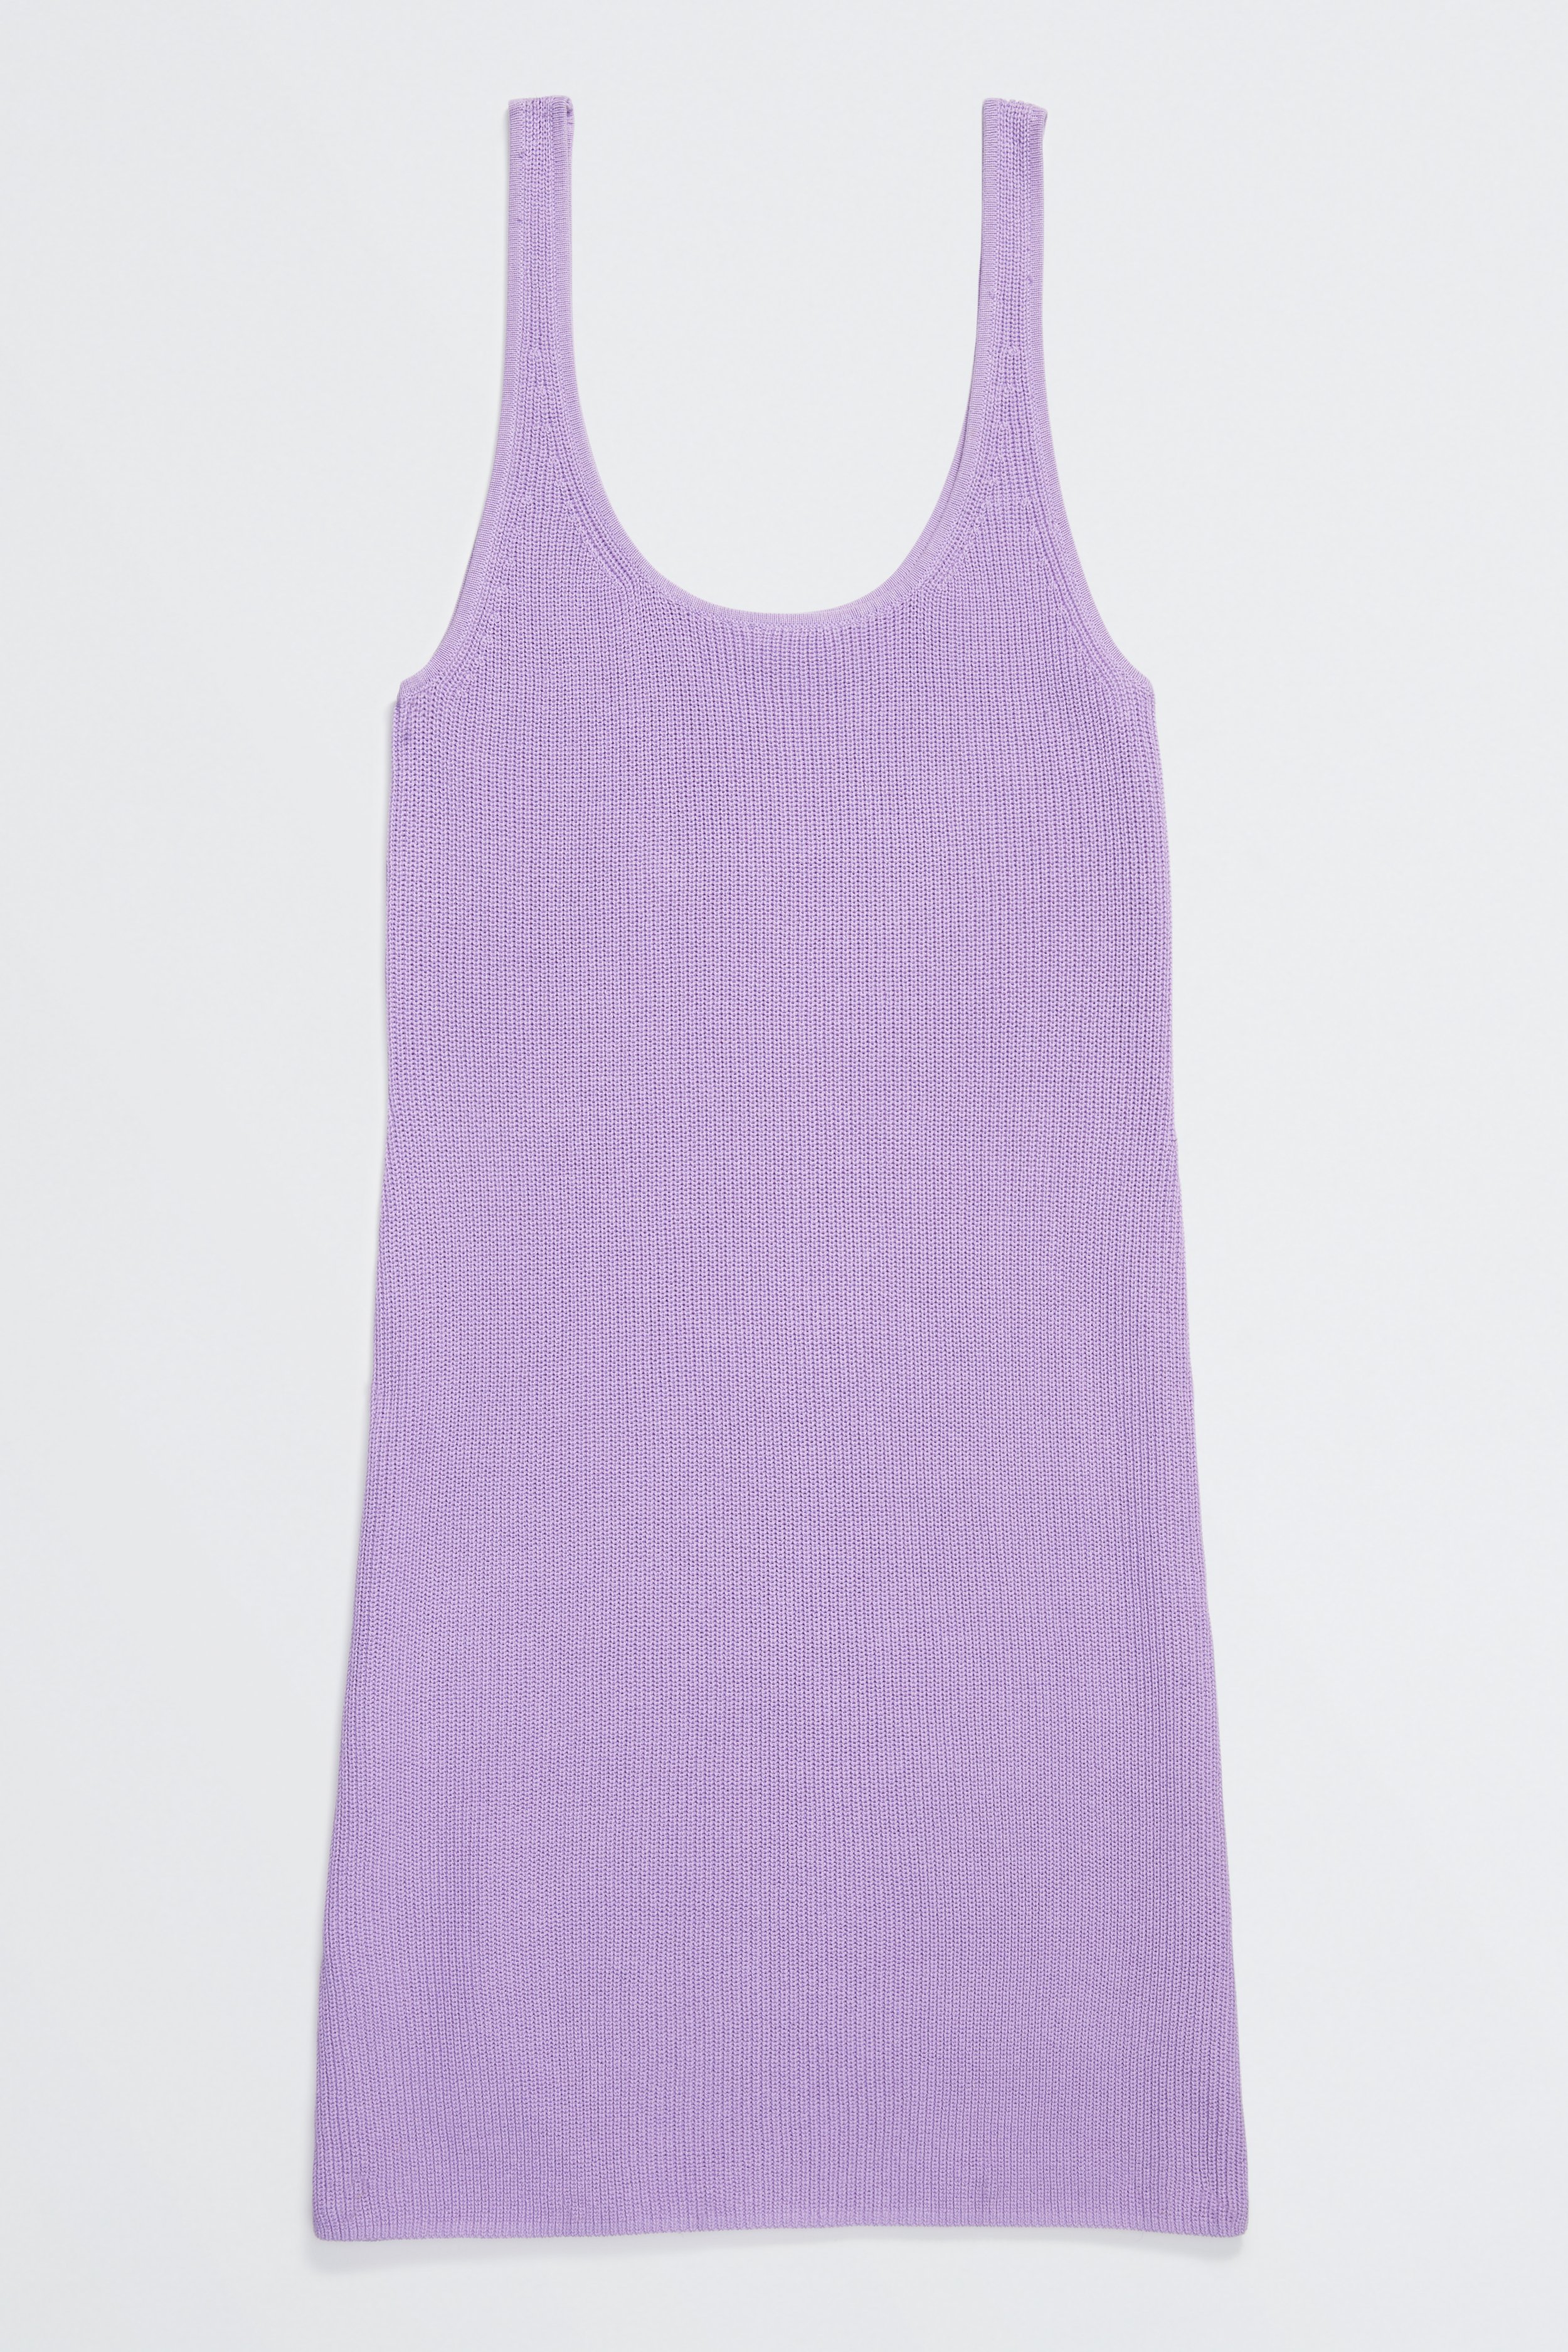 Jennie for Calvin Klein_Paper Yarn Dress_Sheer Lilac.jpg